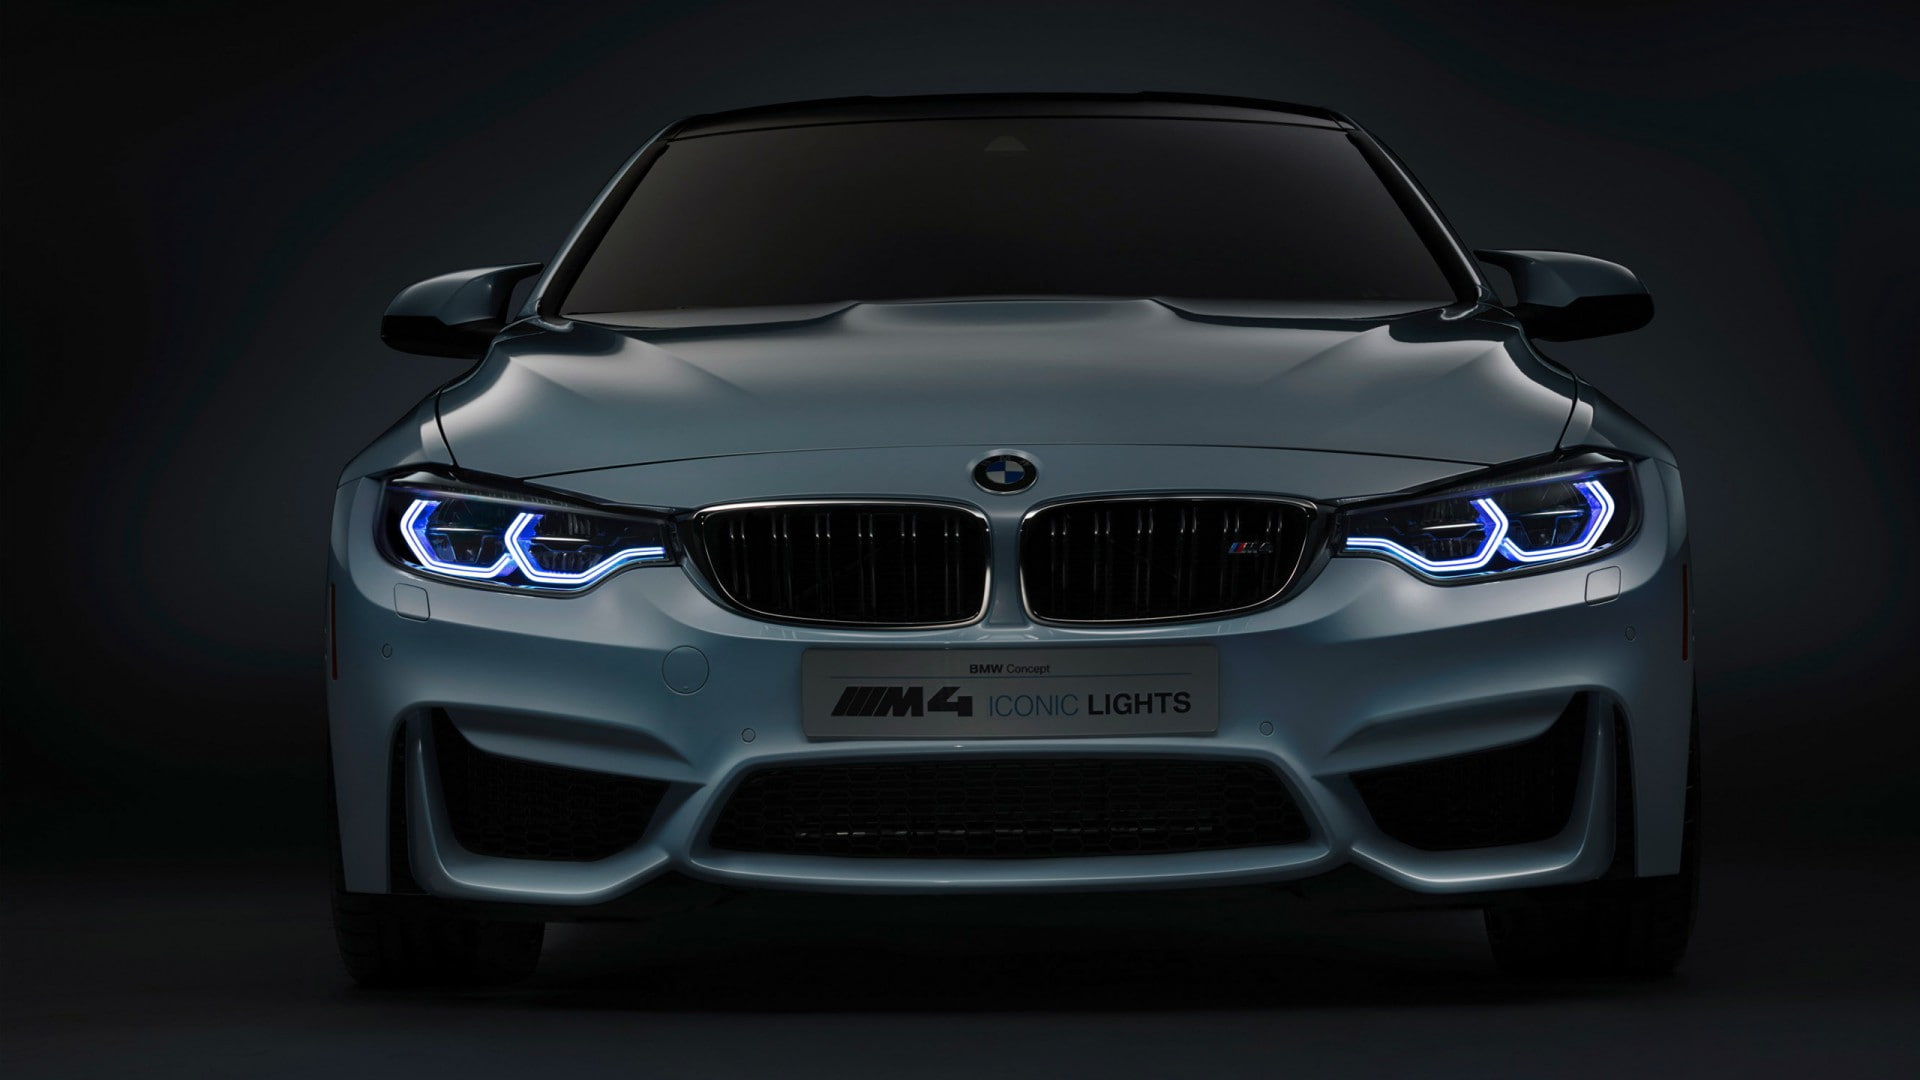 2015 BMW M4 Concept Iconic Lights Car HD, silver bmw m4